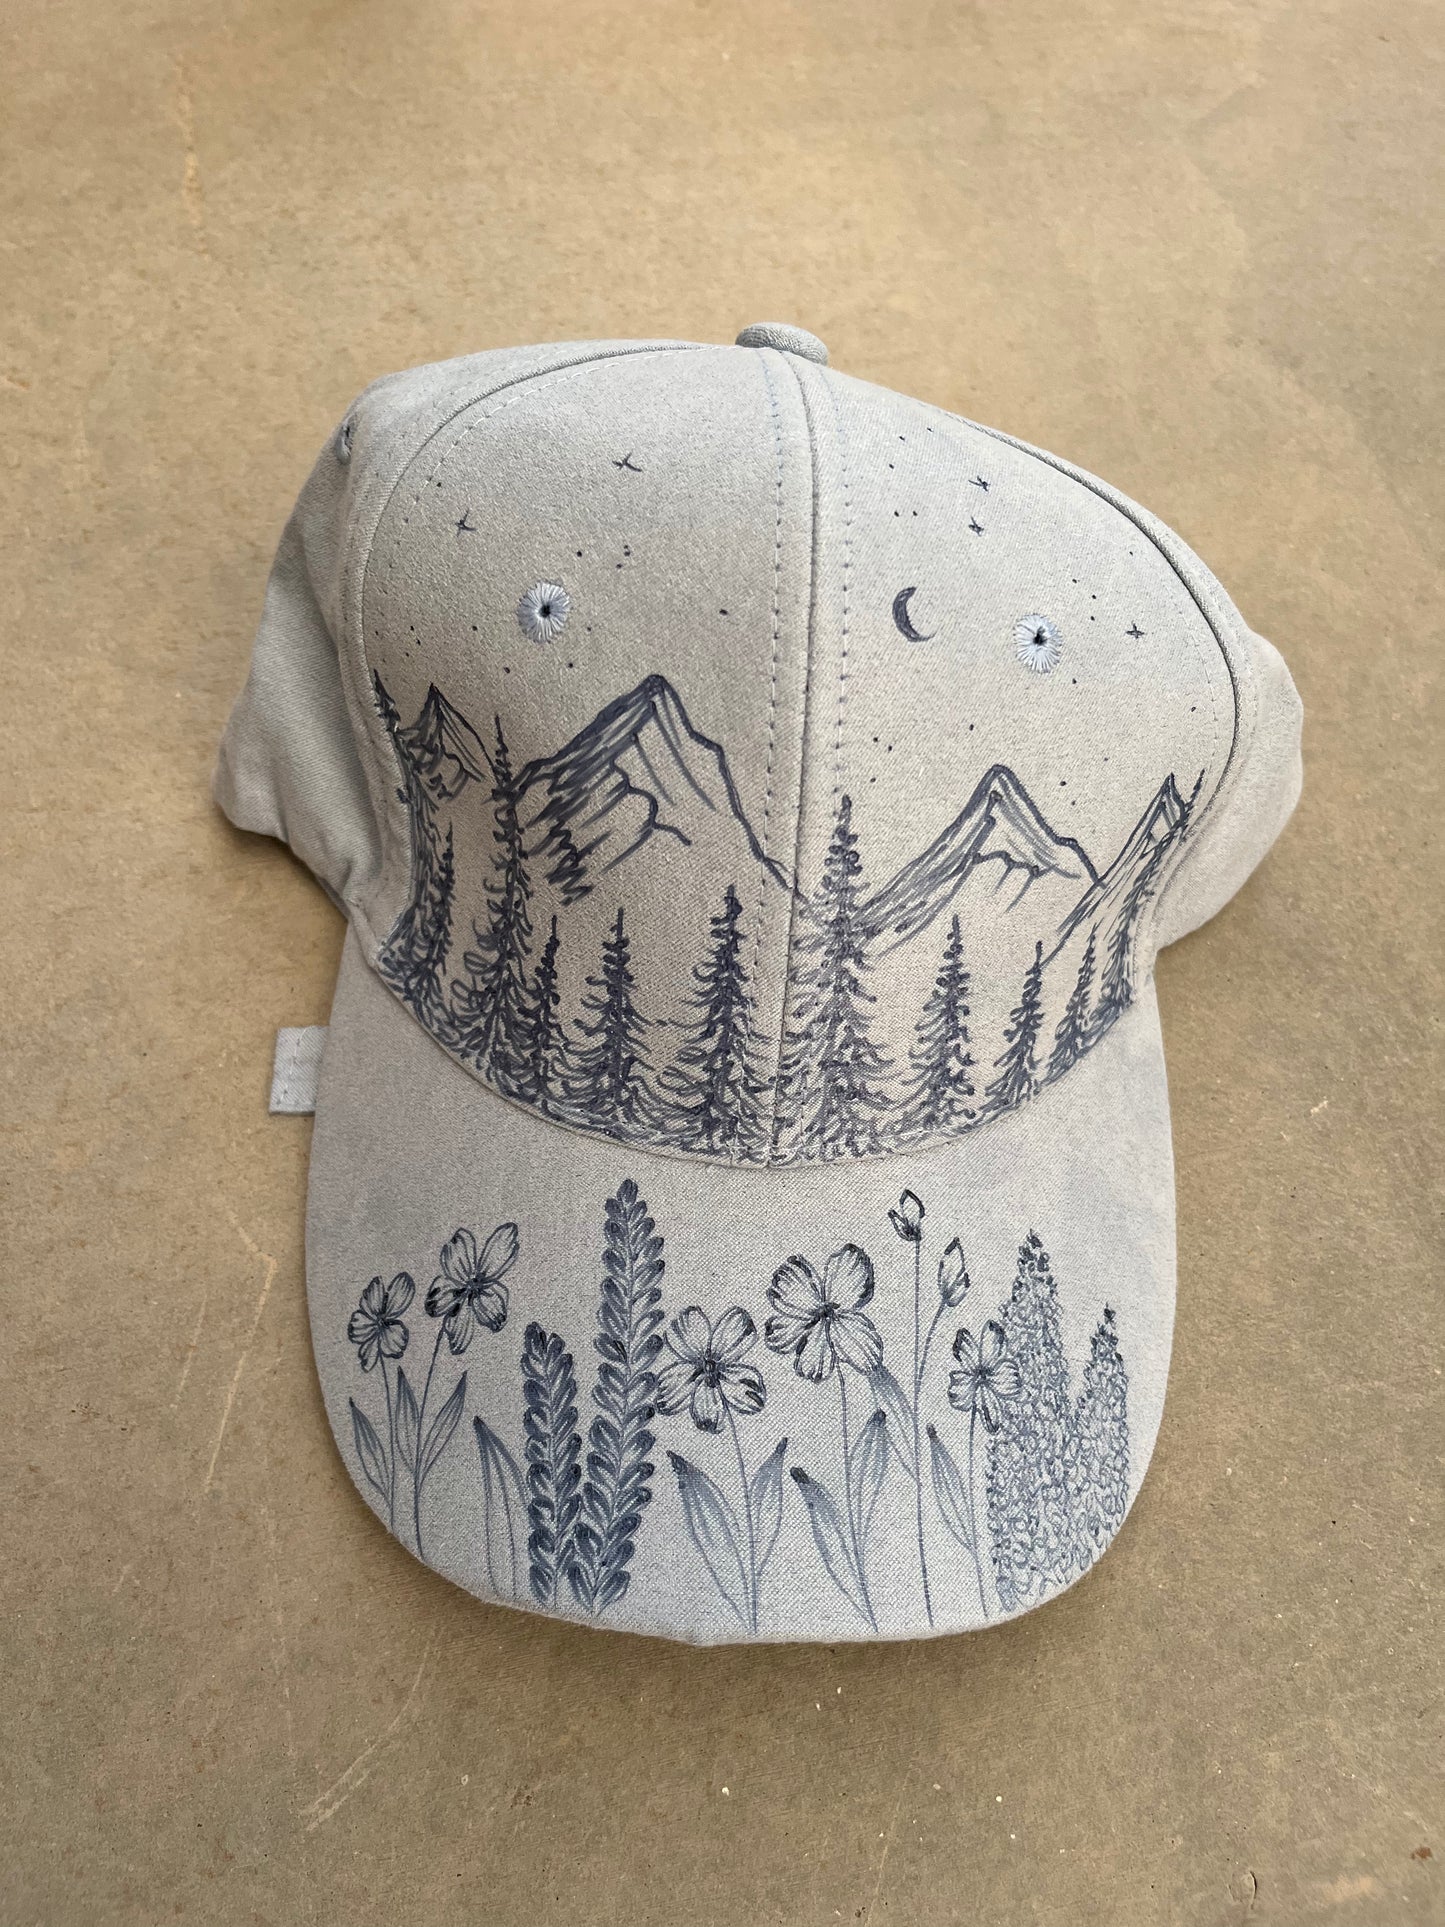 Burned blue mountain ball cap